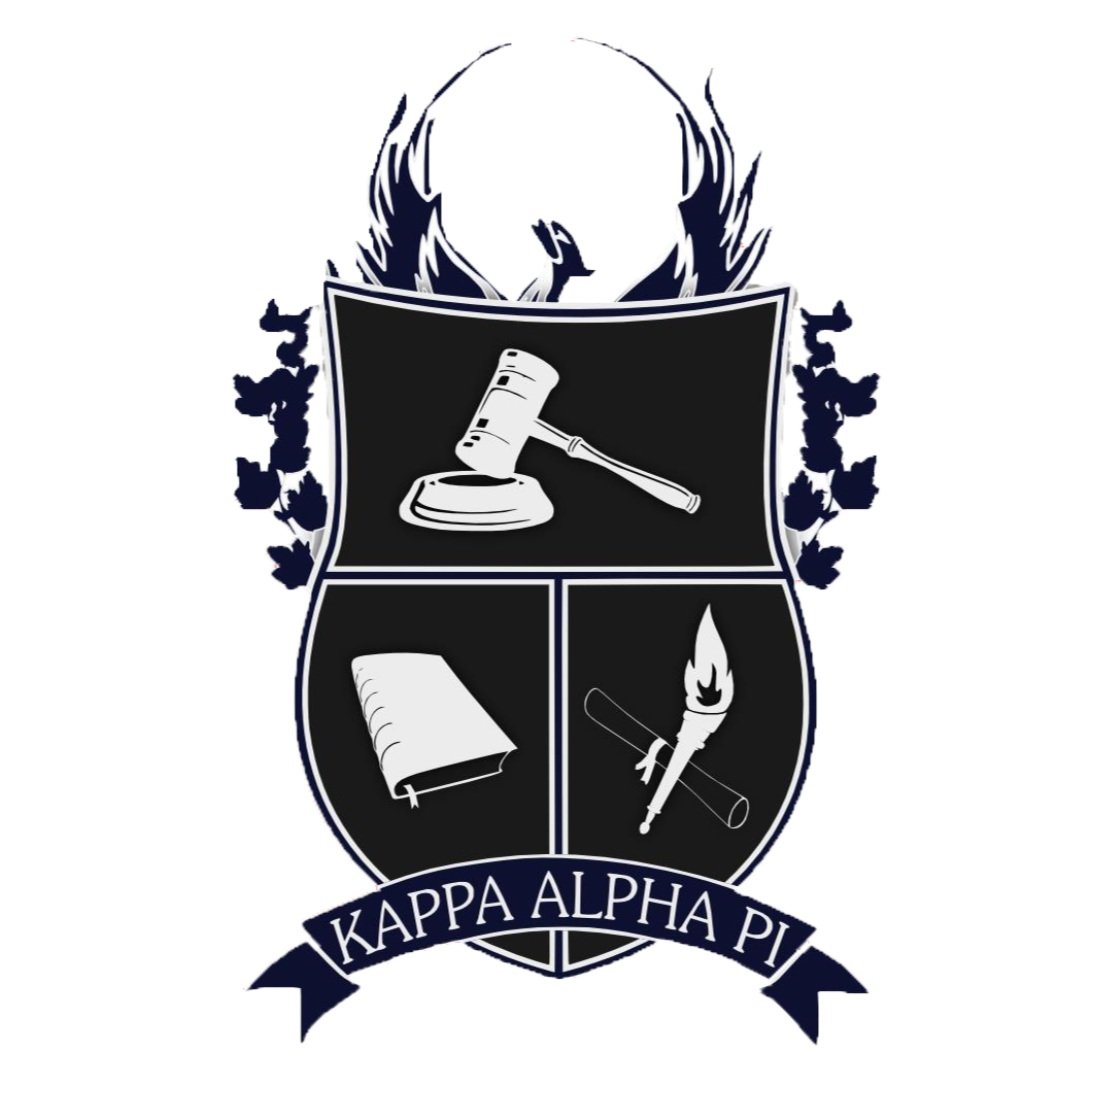 Kappa Alpha Pi